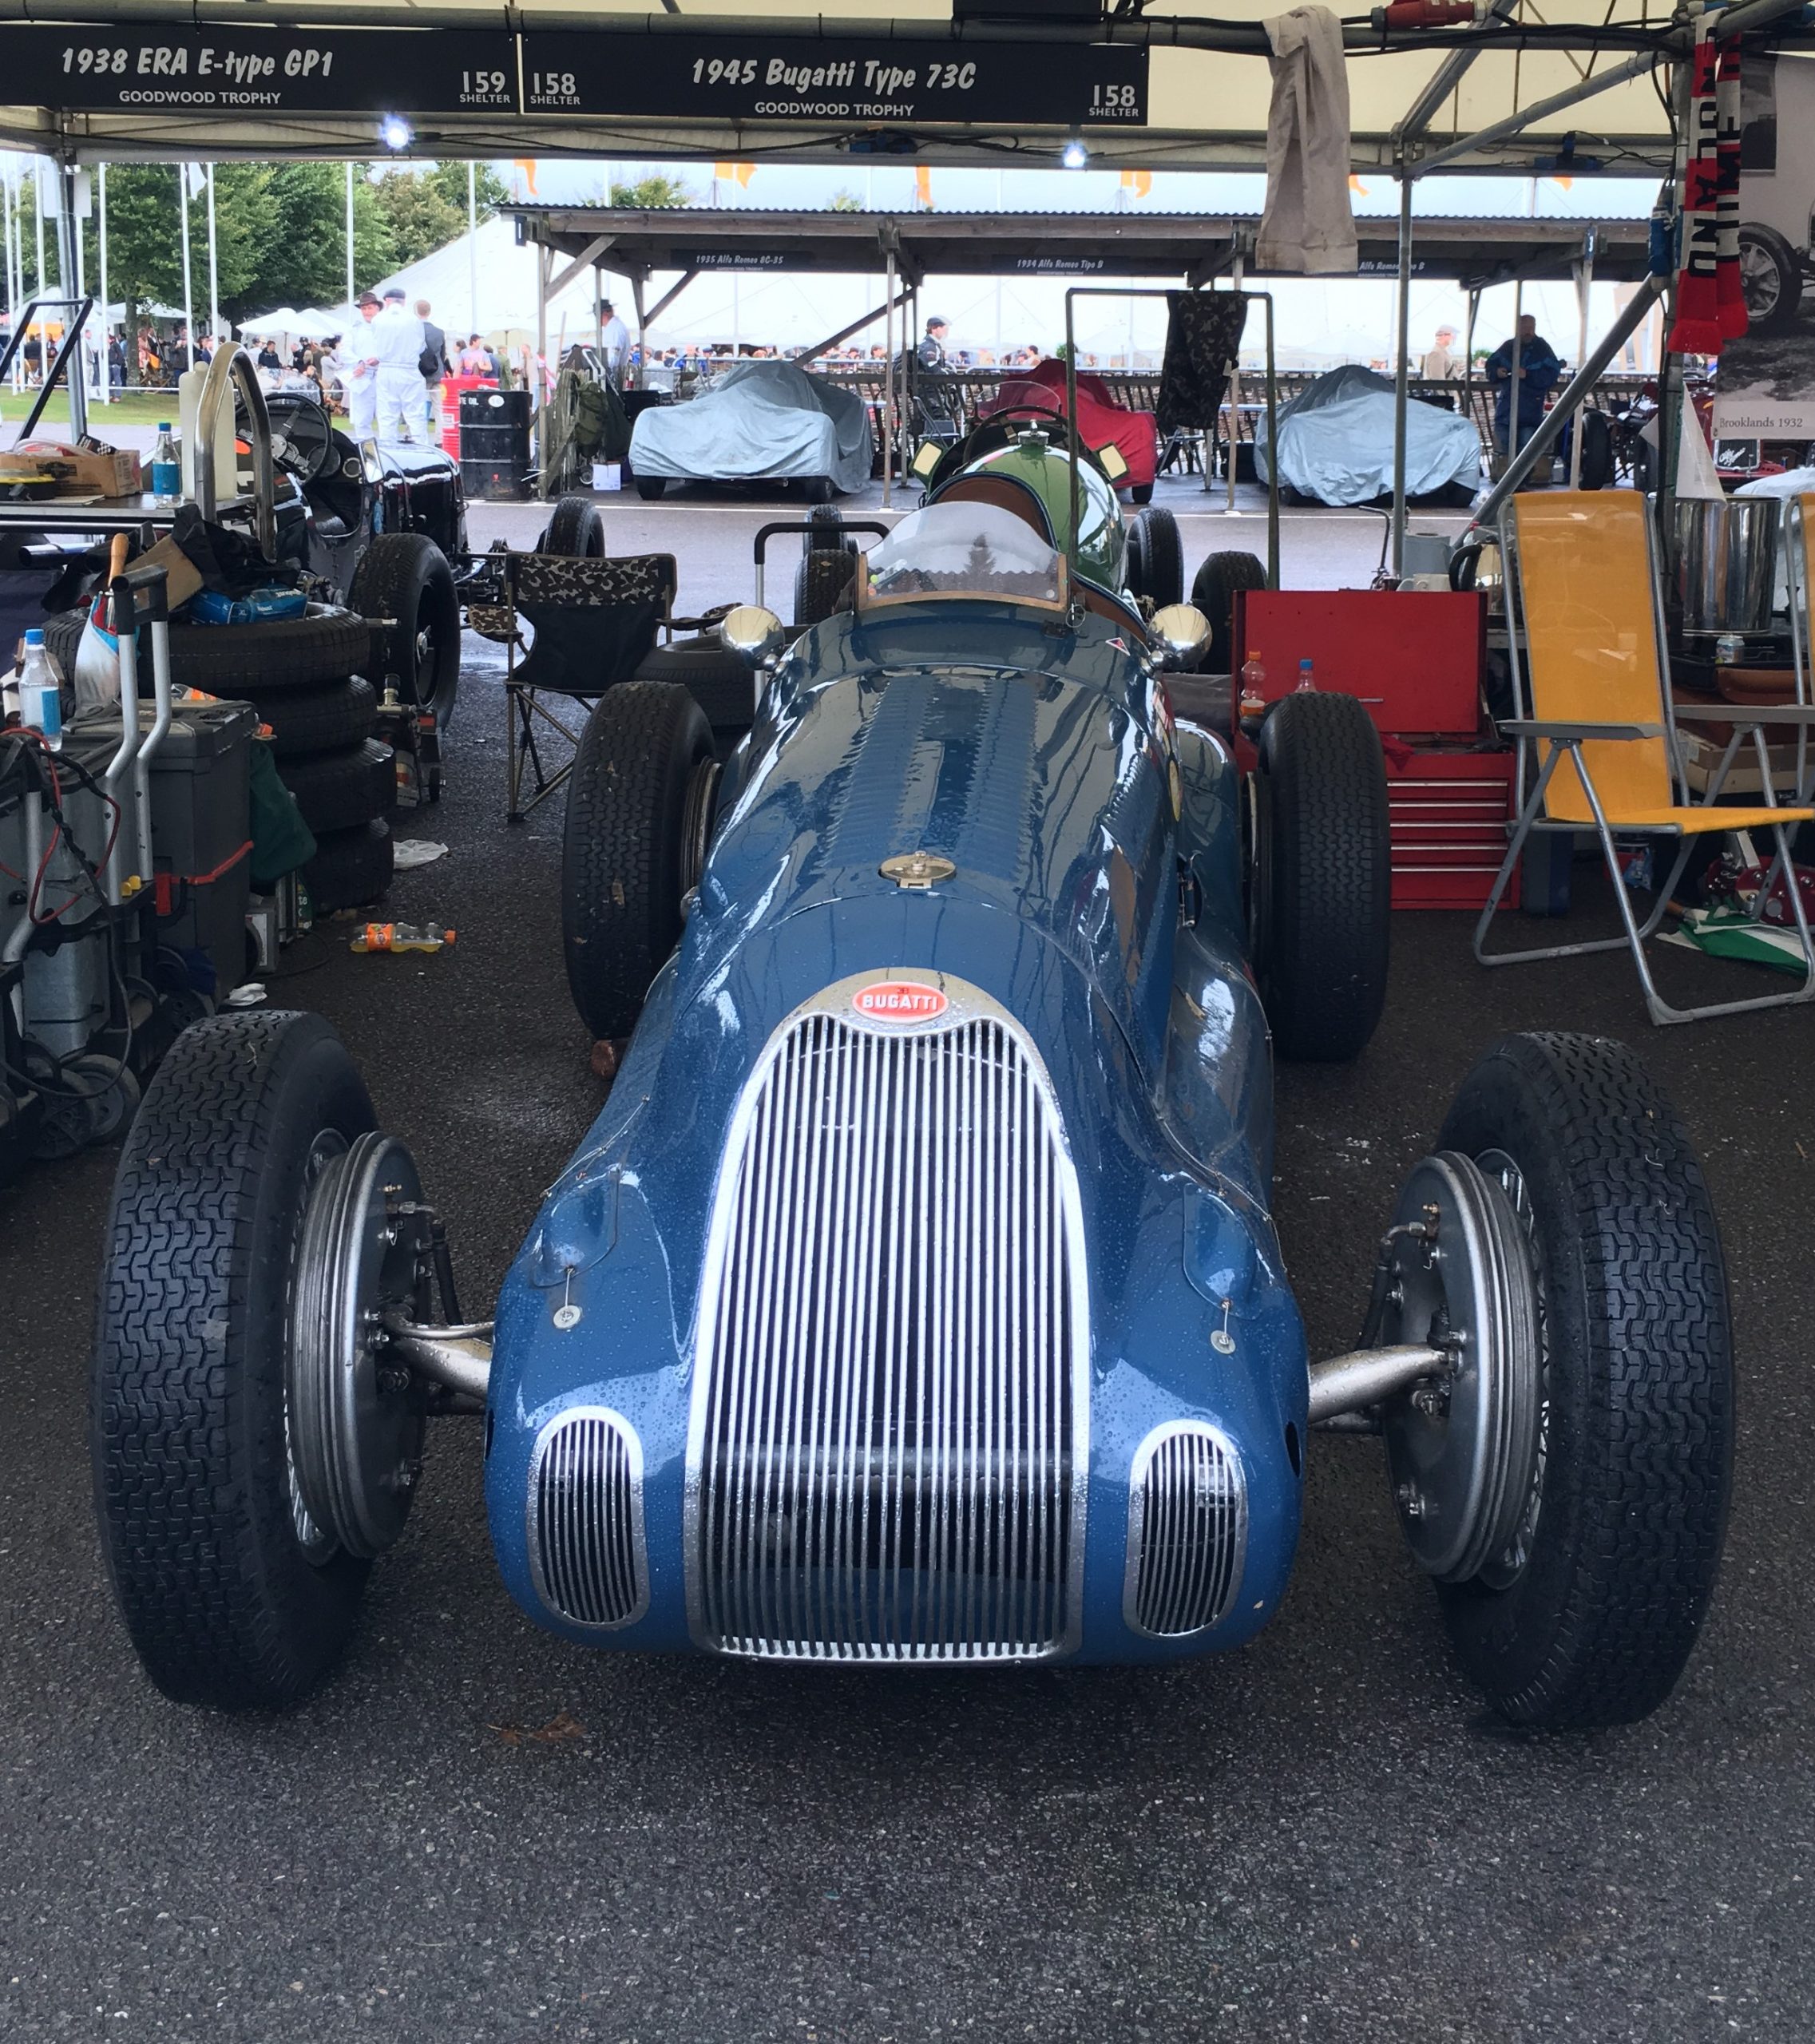 Bugatti Type 73C – Goodwood Revival 2016 winner – Goodwood Trophy race